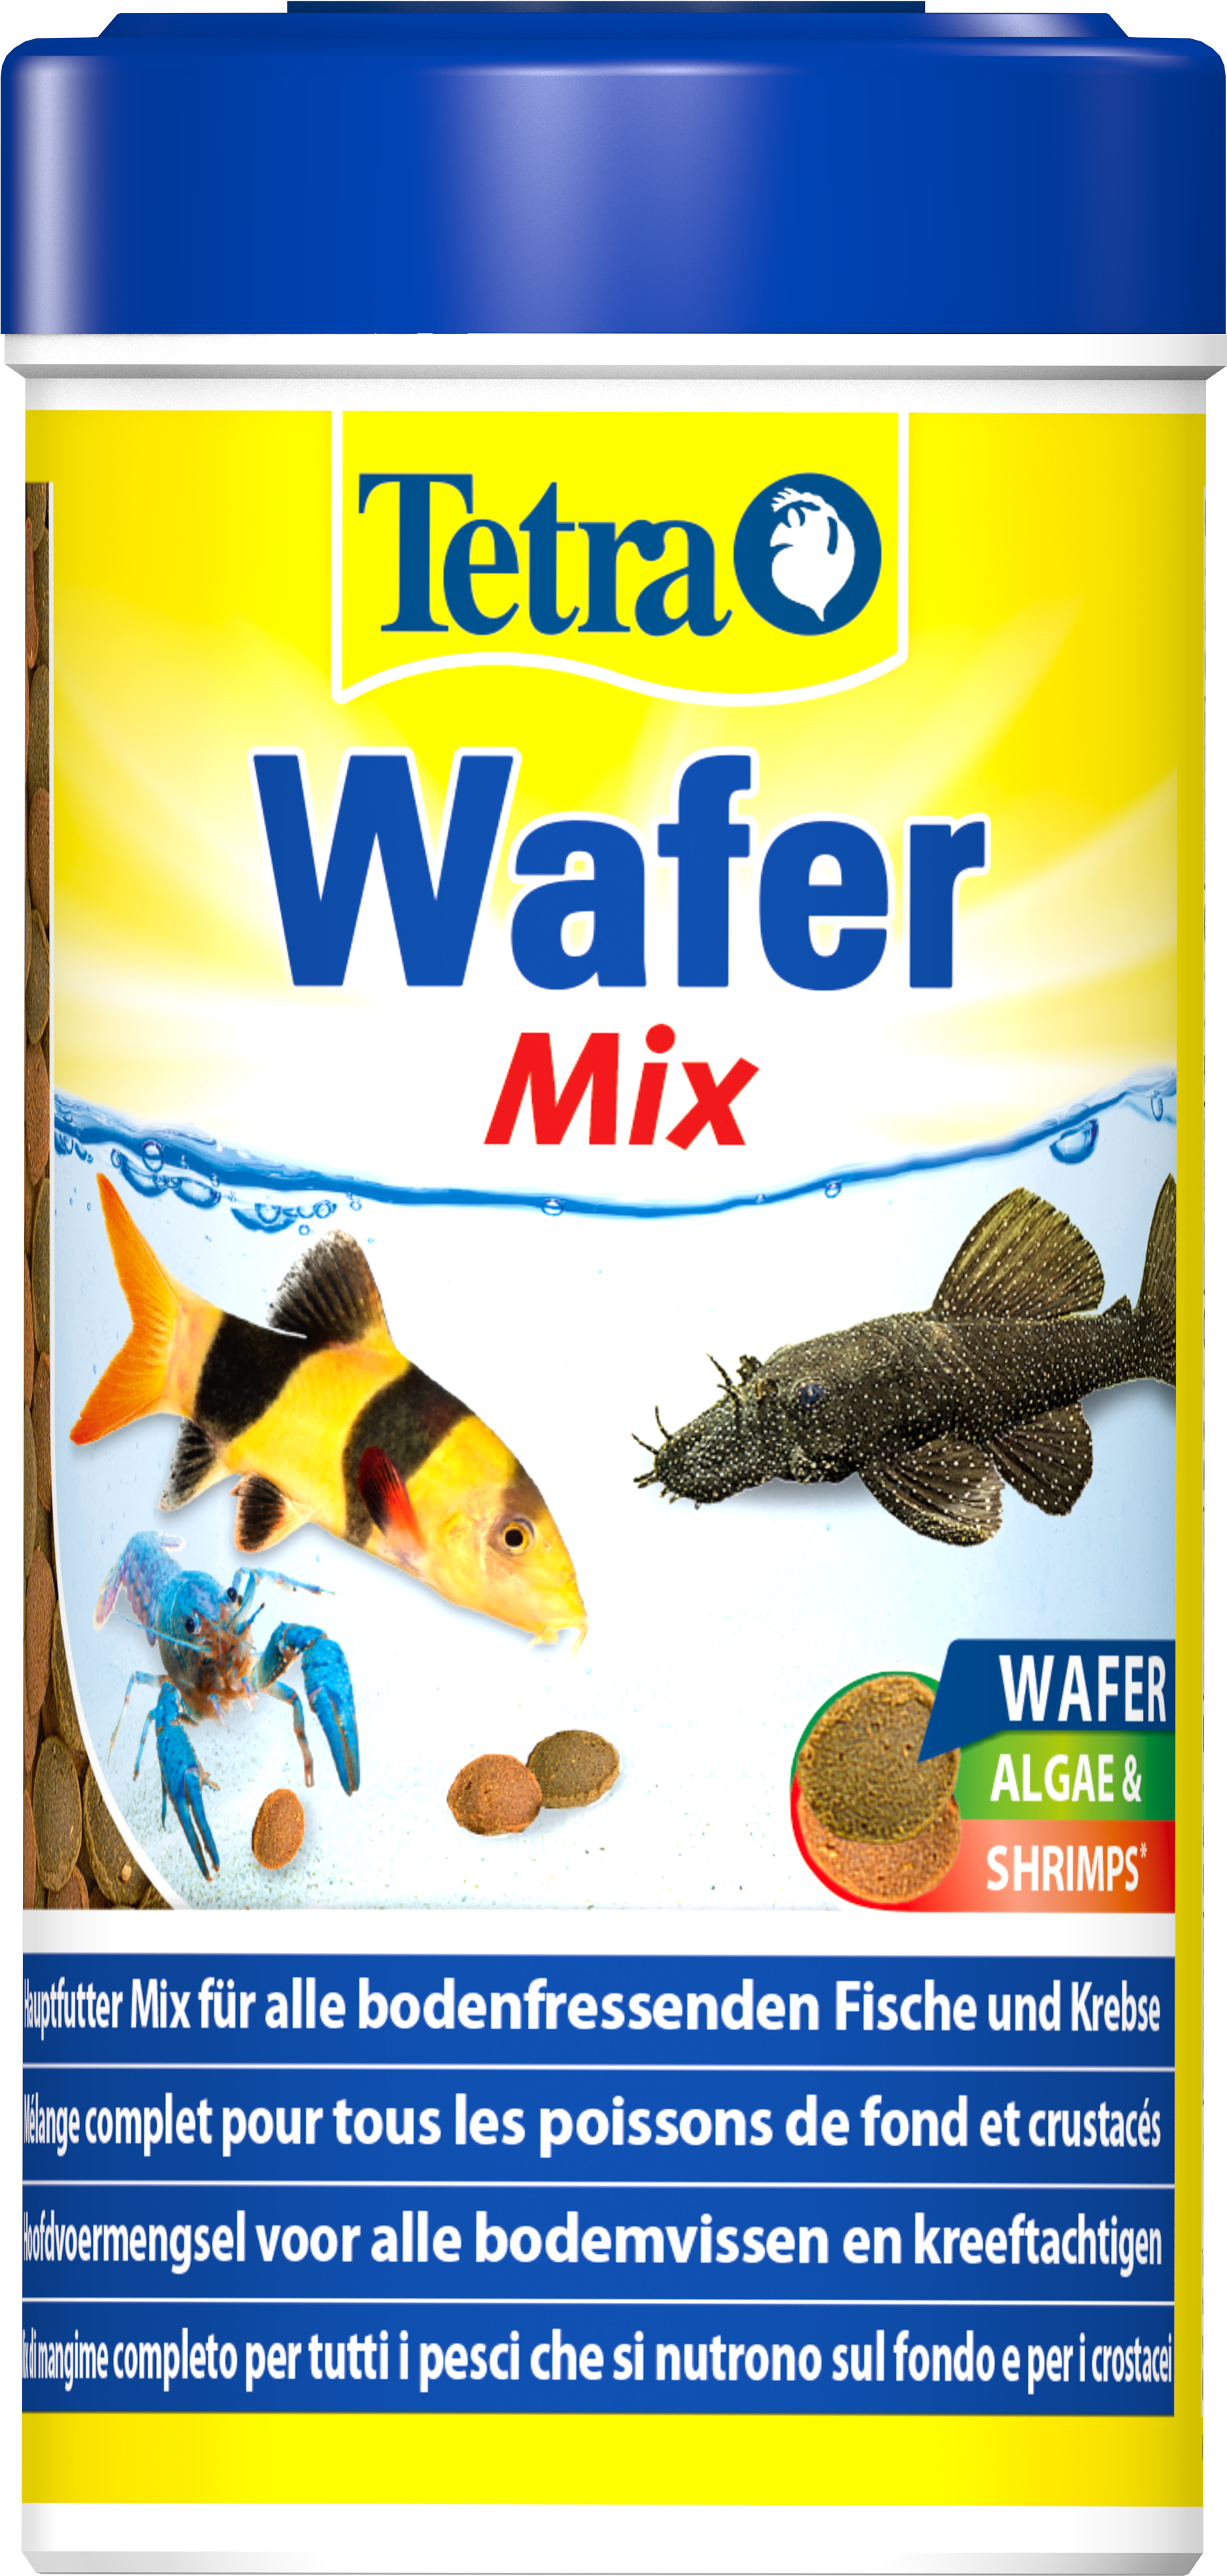 Tetra wafer mix 119gr/250ml - Produits d'alimentation (11232890)